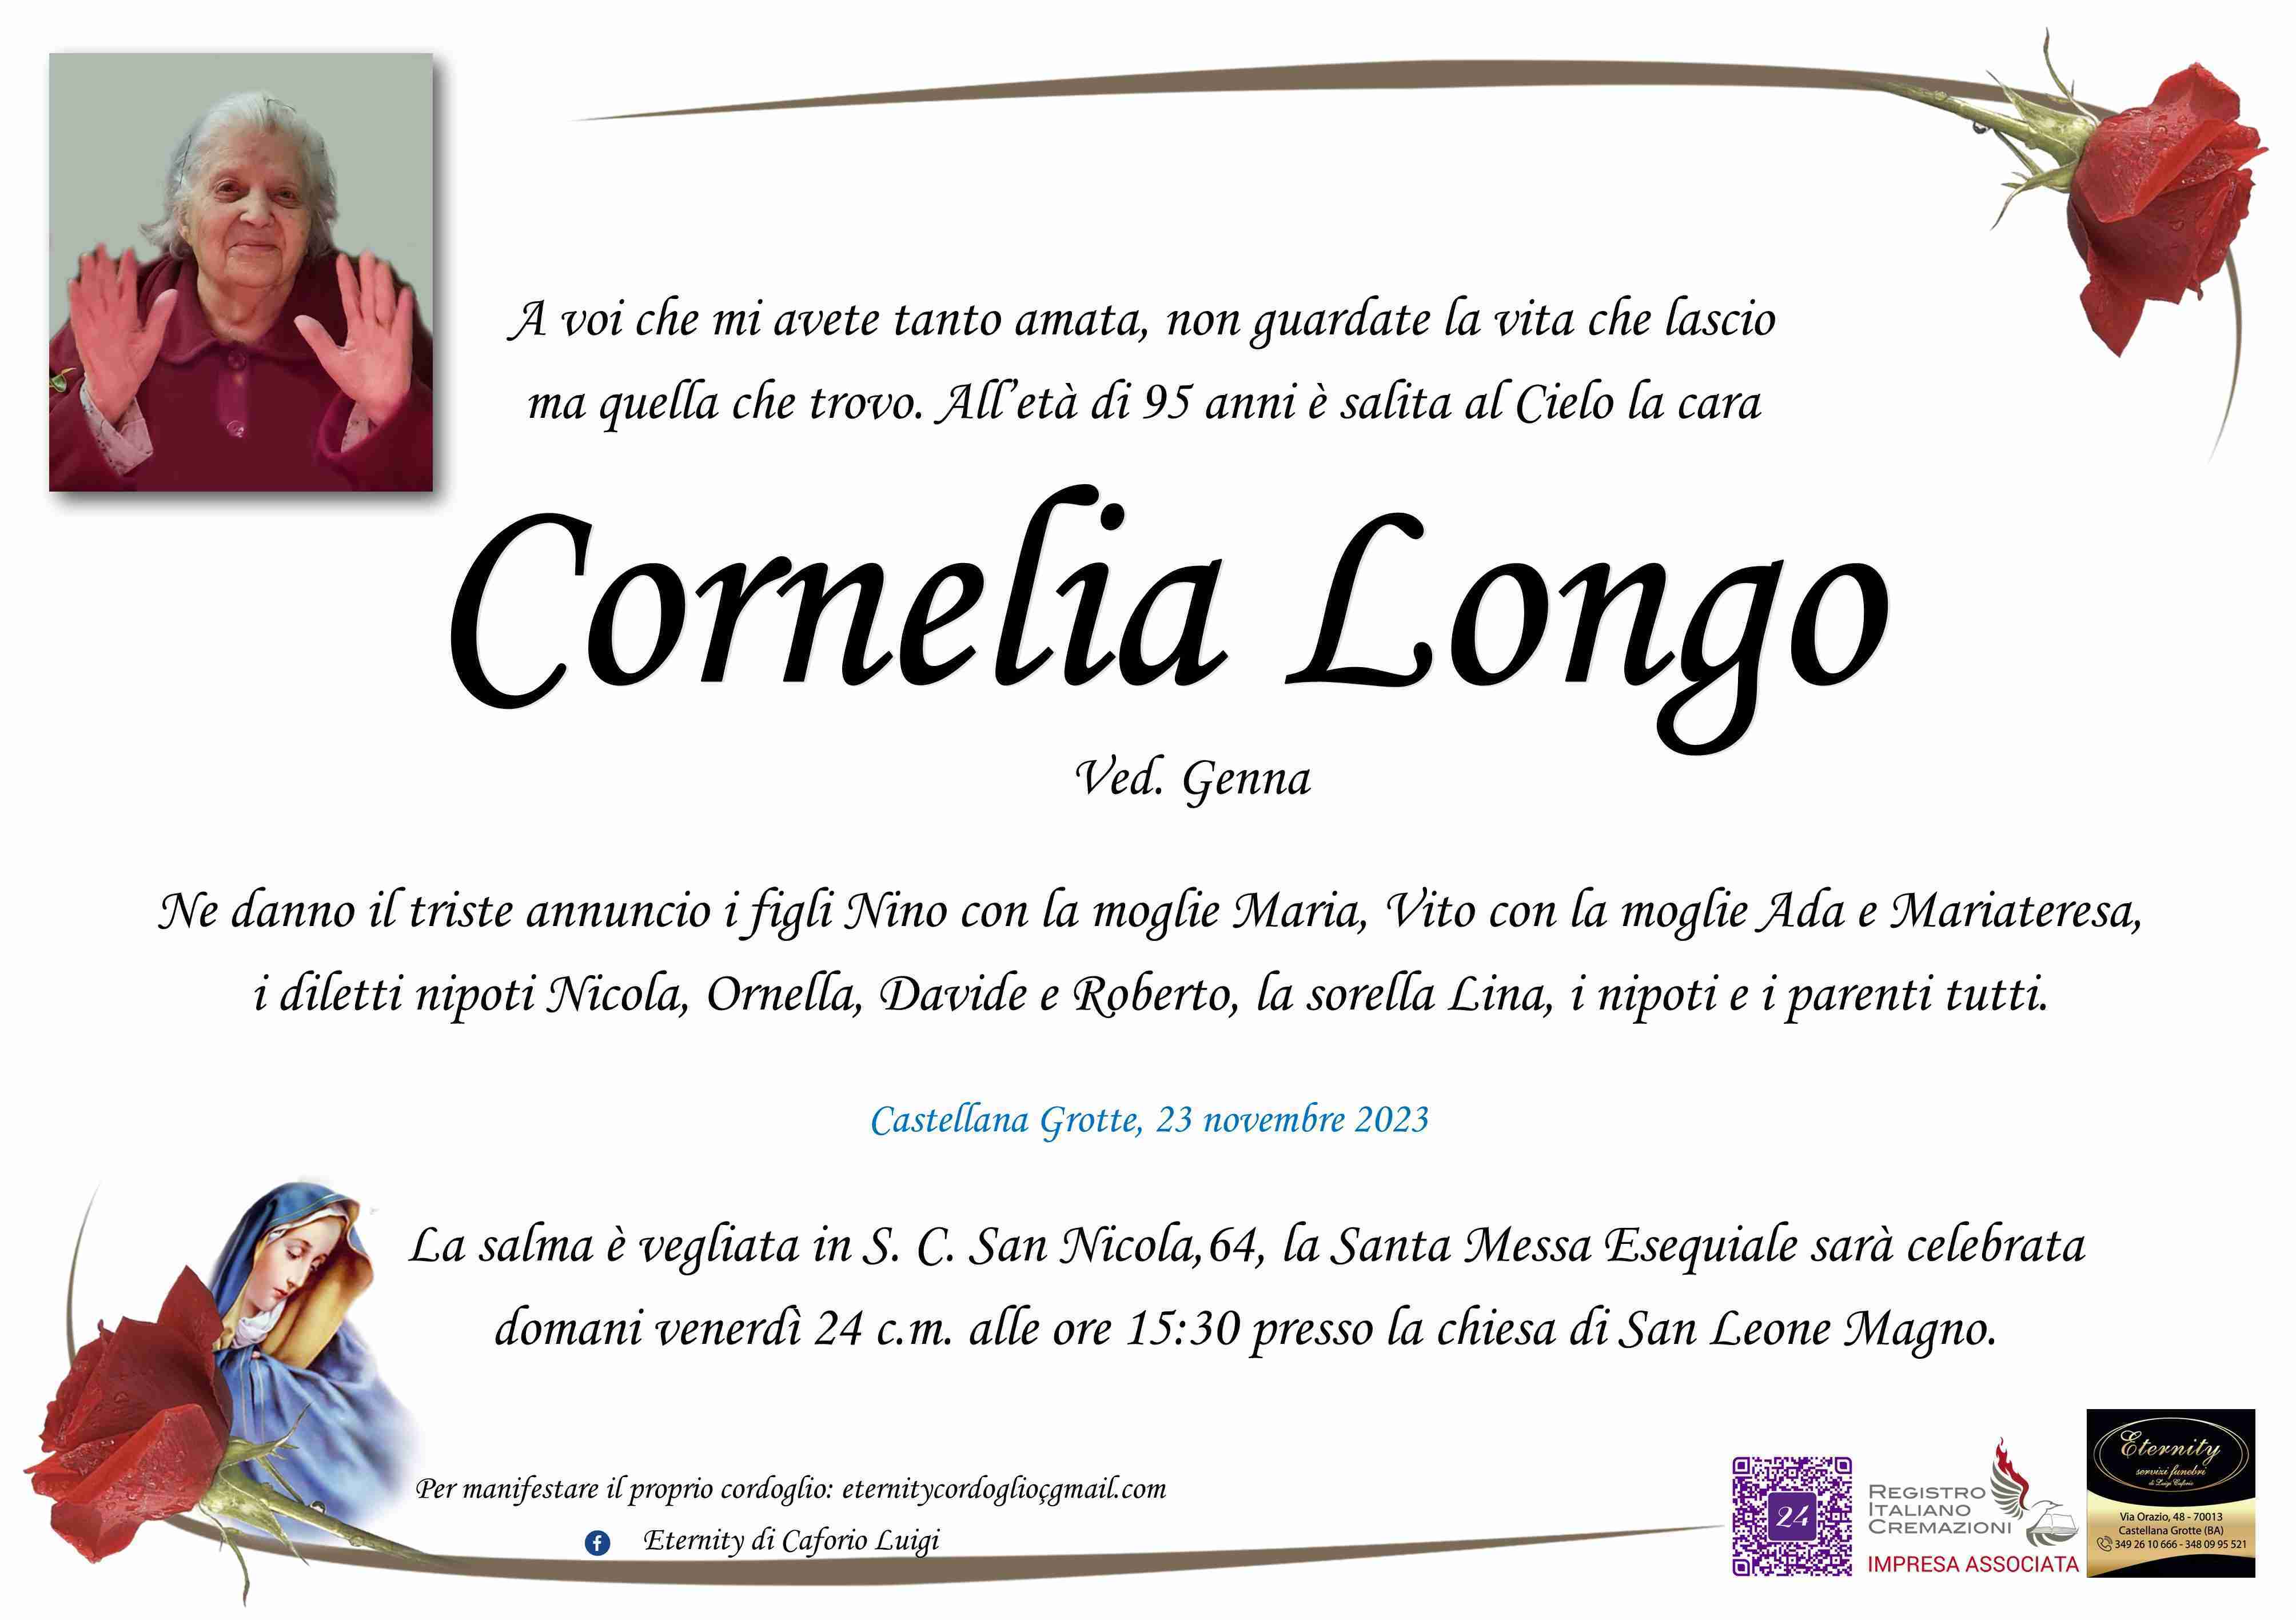 Cornelia Longo